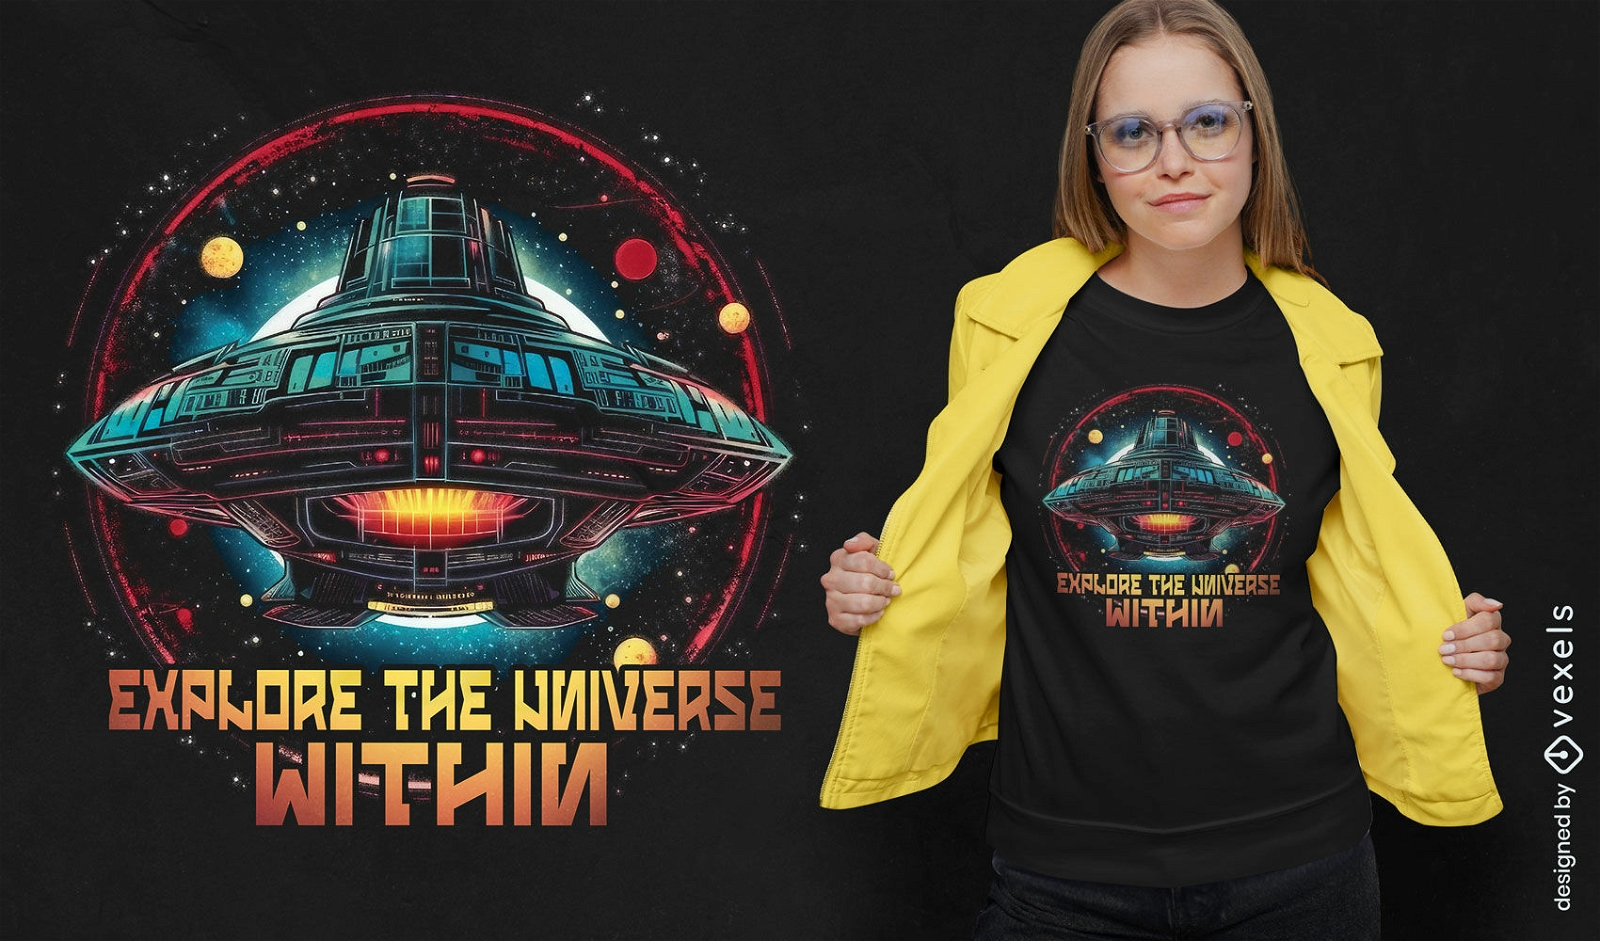 Galactic spaceship t-shirt design